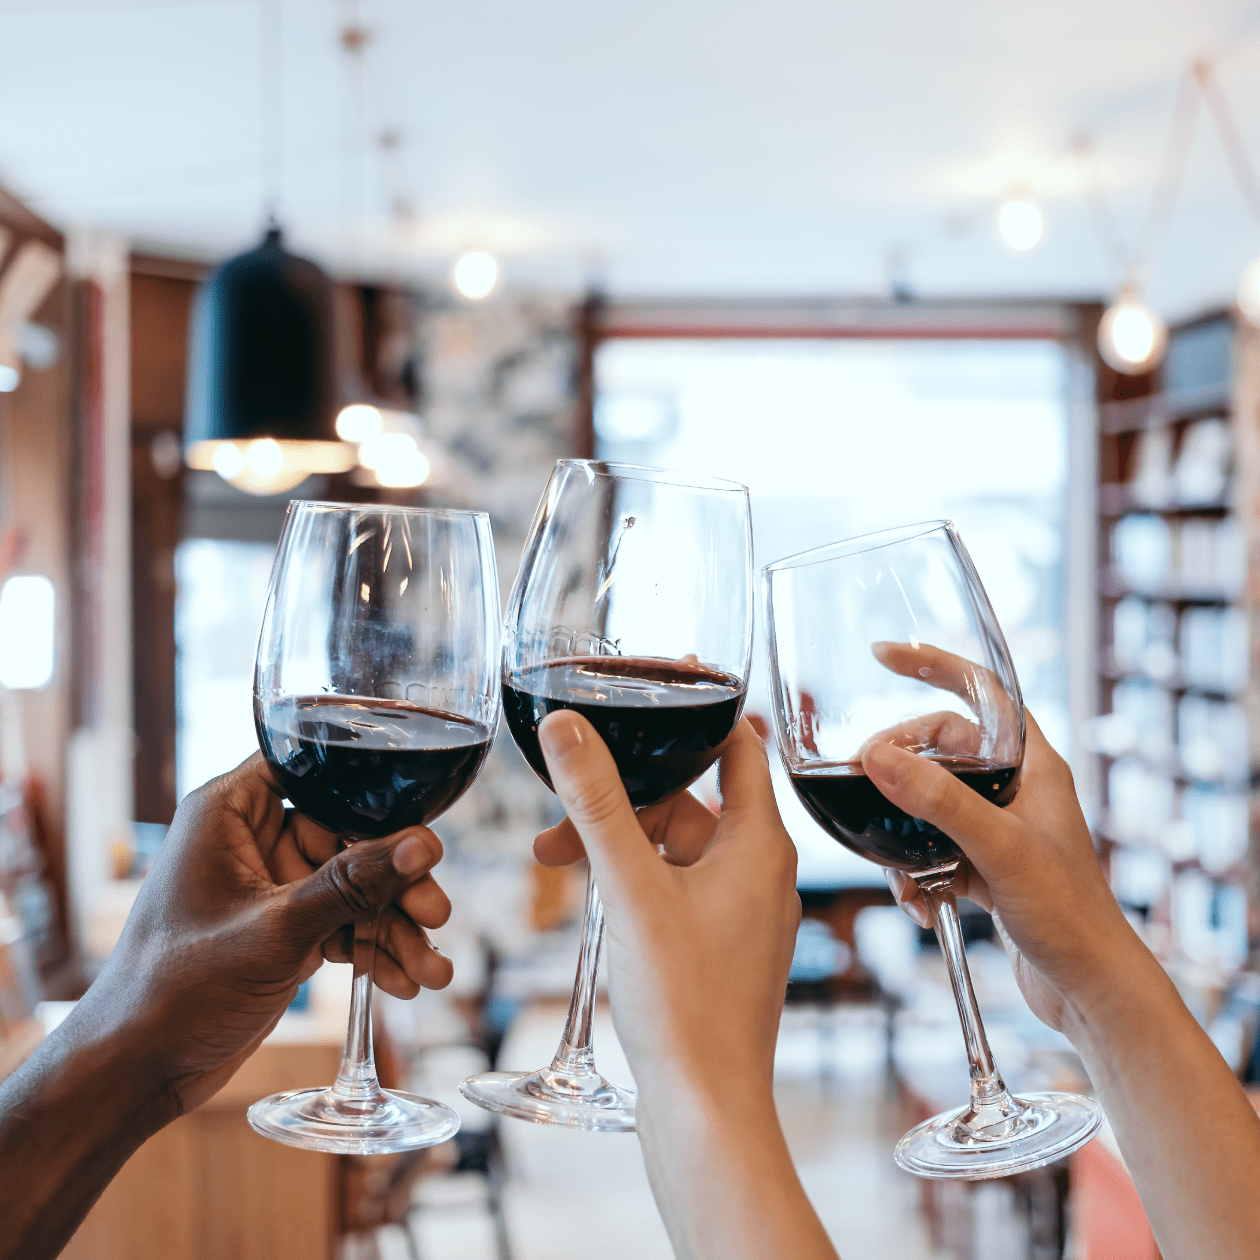 Cheersing glasses of red wine | DRINKS